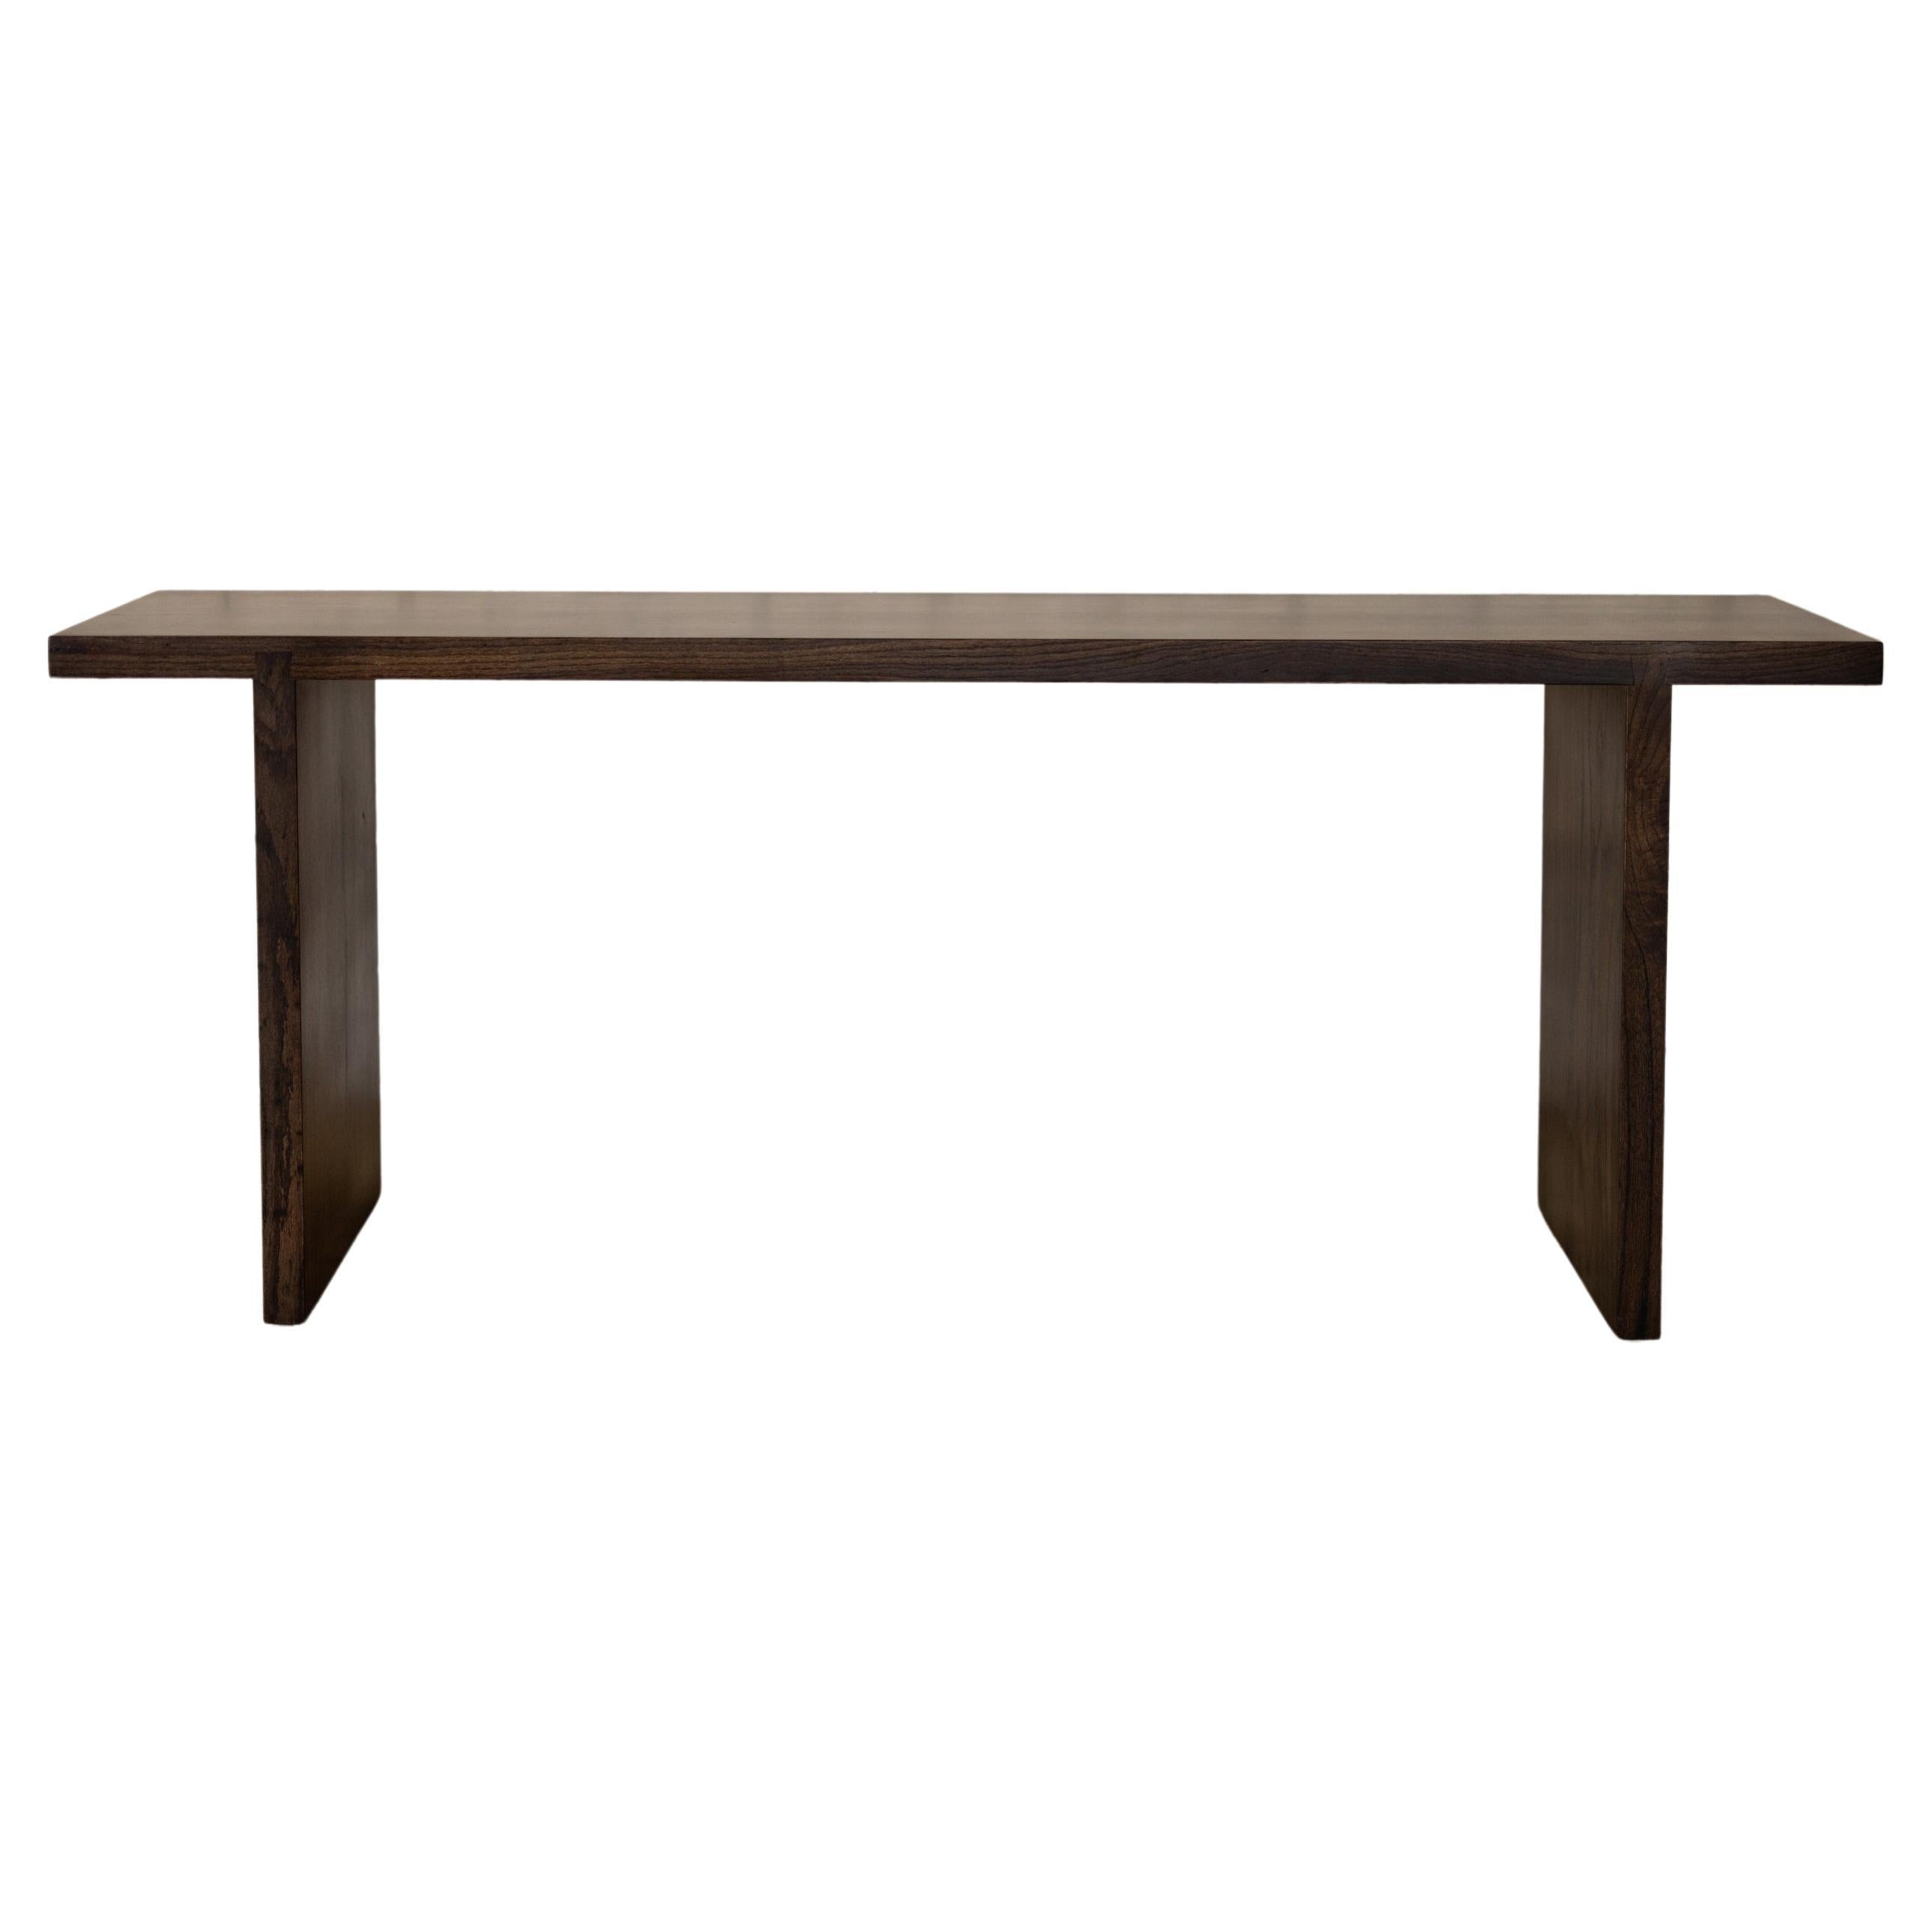 Asian Modern Style Desk, Buffet or Sofa Table Dark Oak Stain